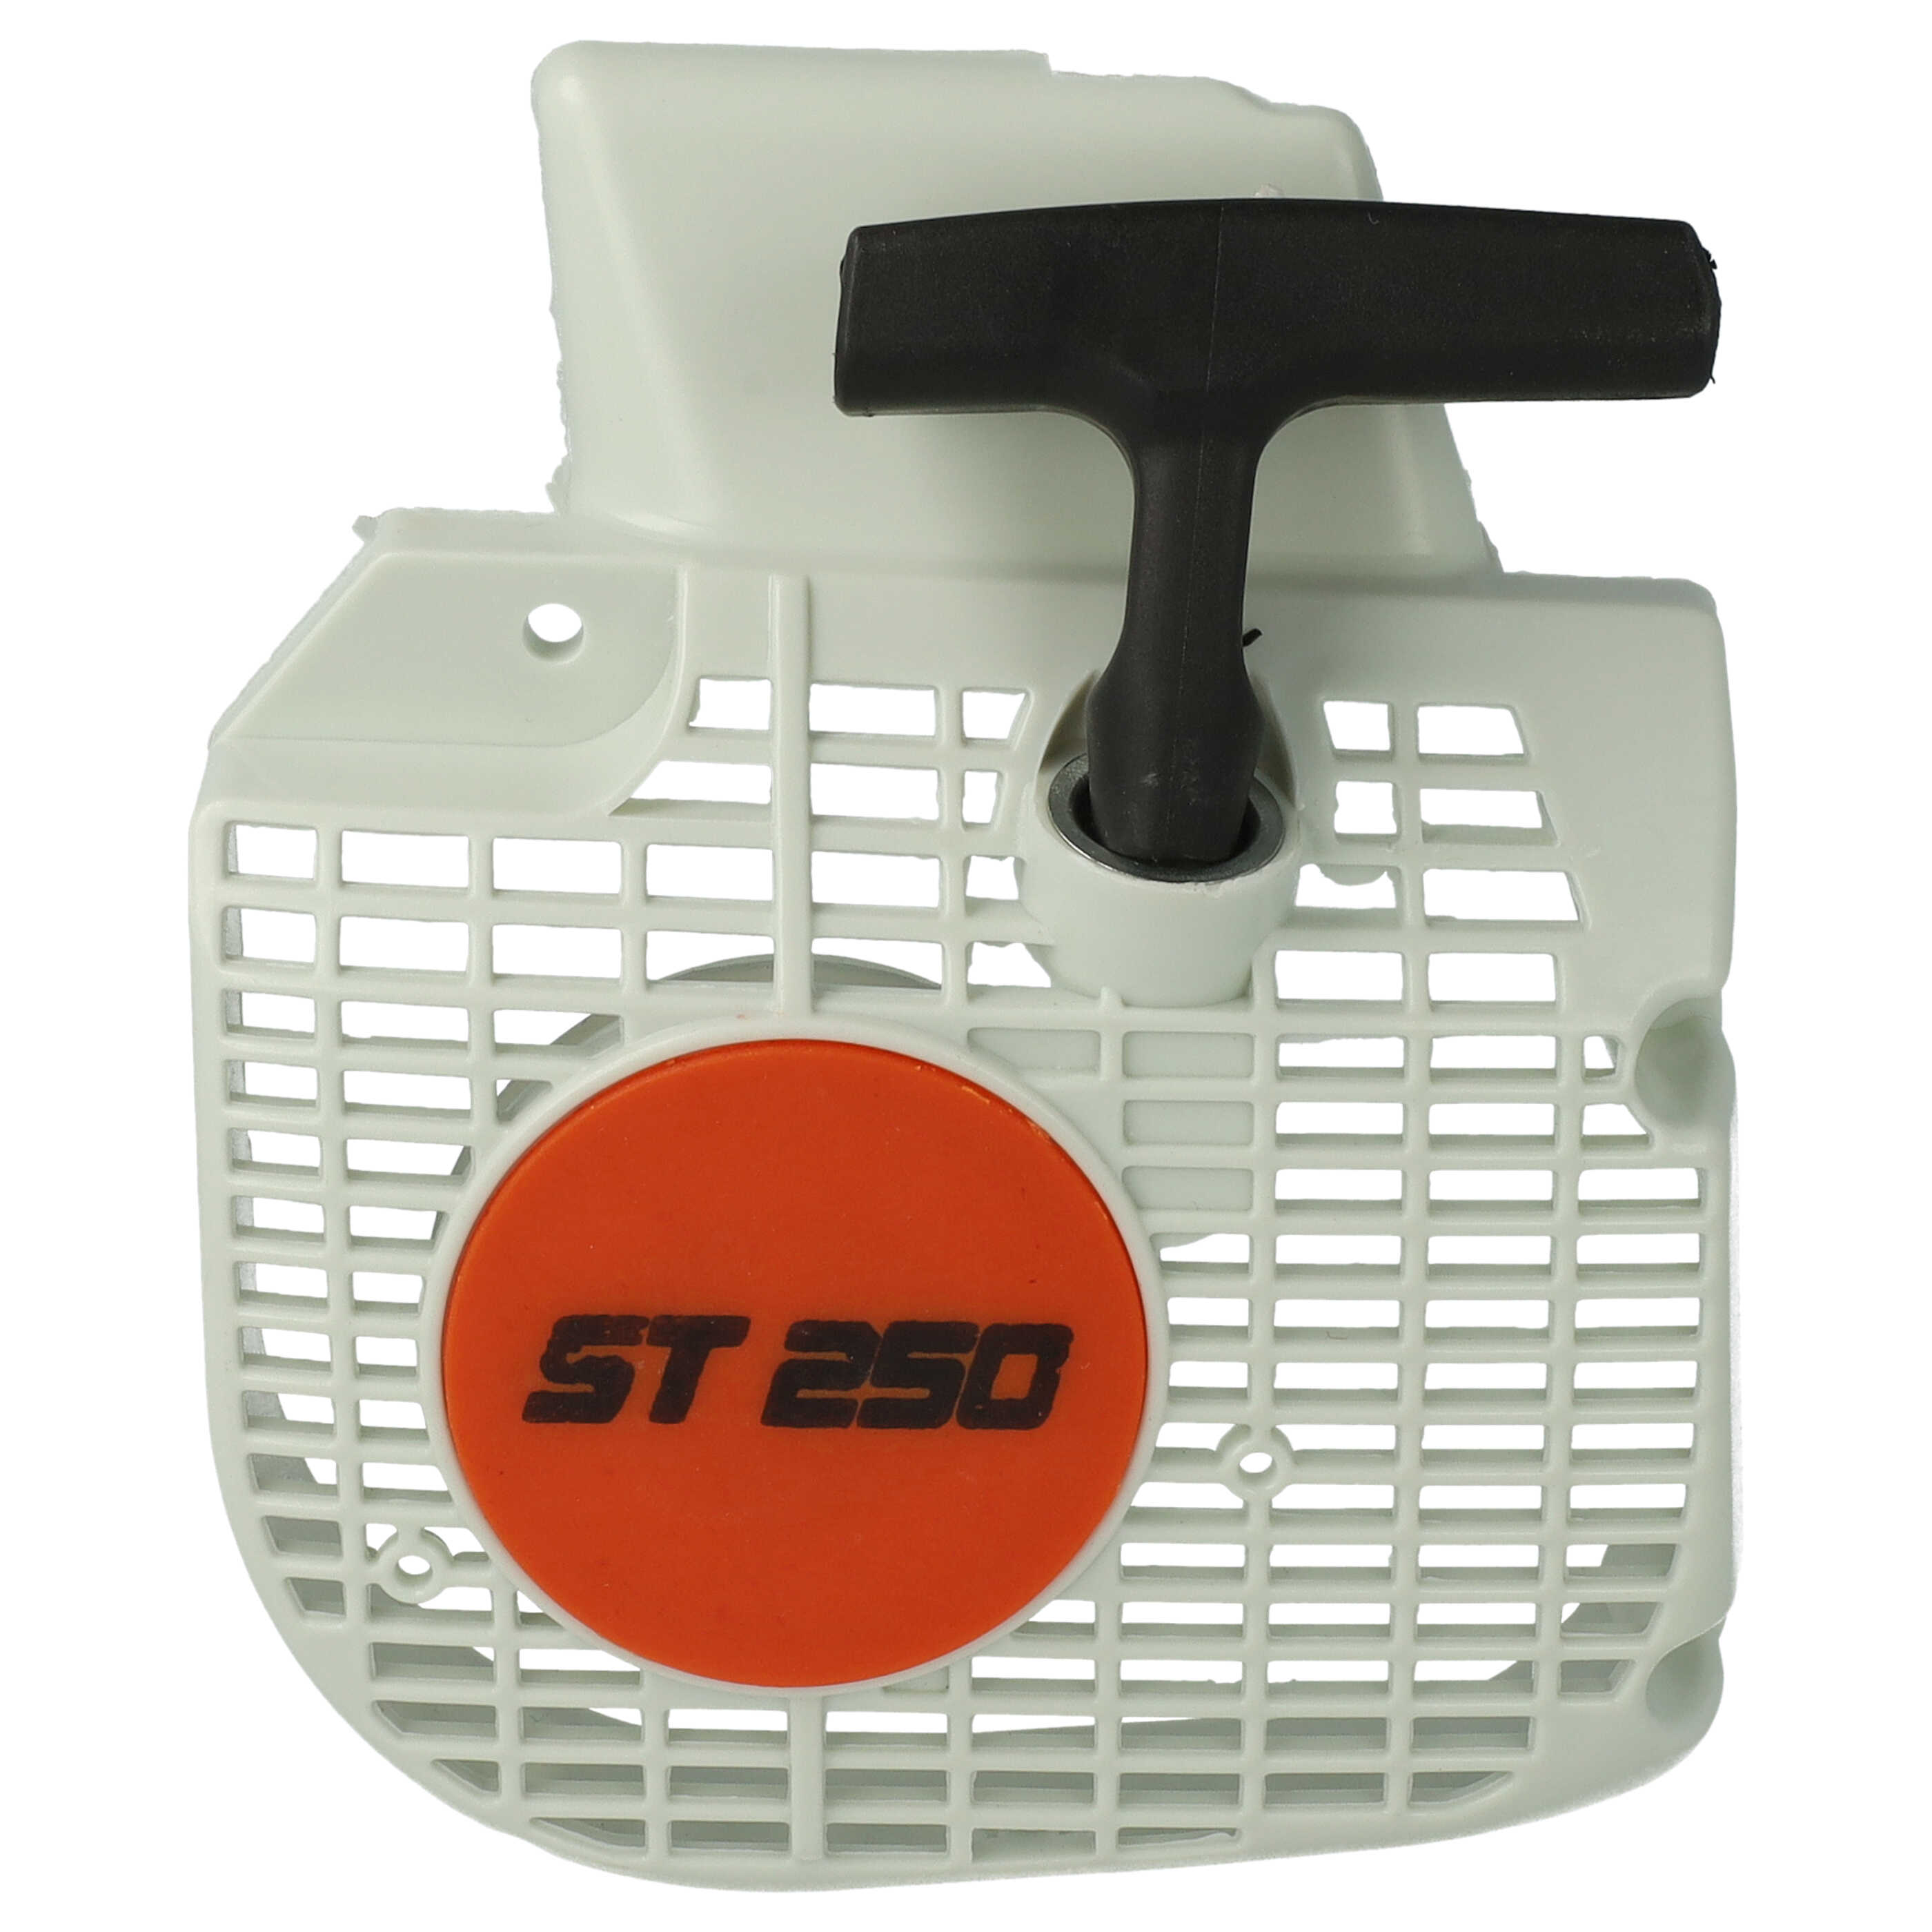 Arrancador de cuerda reemplaza Stihl 1123-080-1802 compatible con Stihl motosierra - 16,7 x 13,8 x 3,8 cm